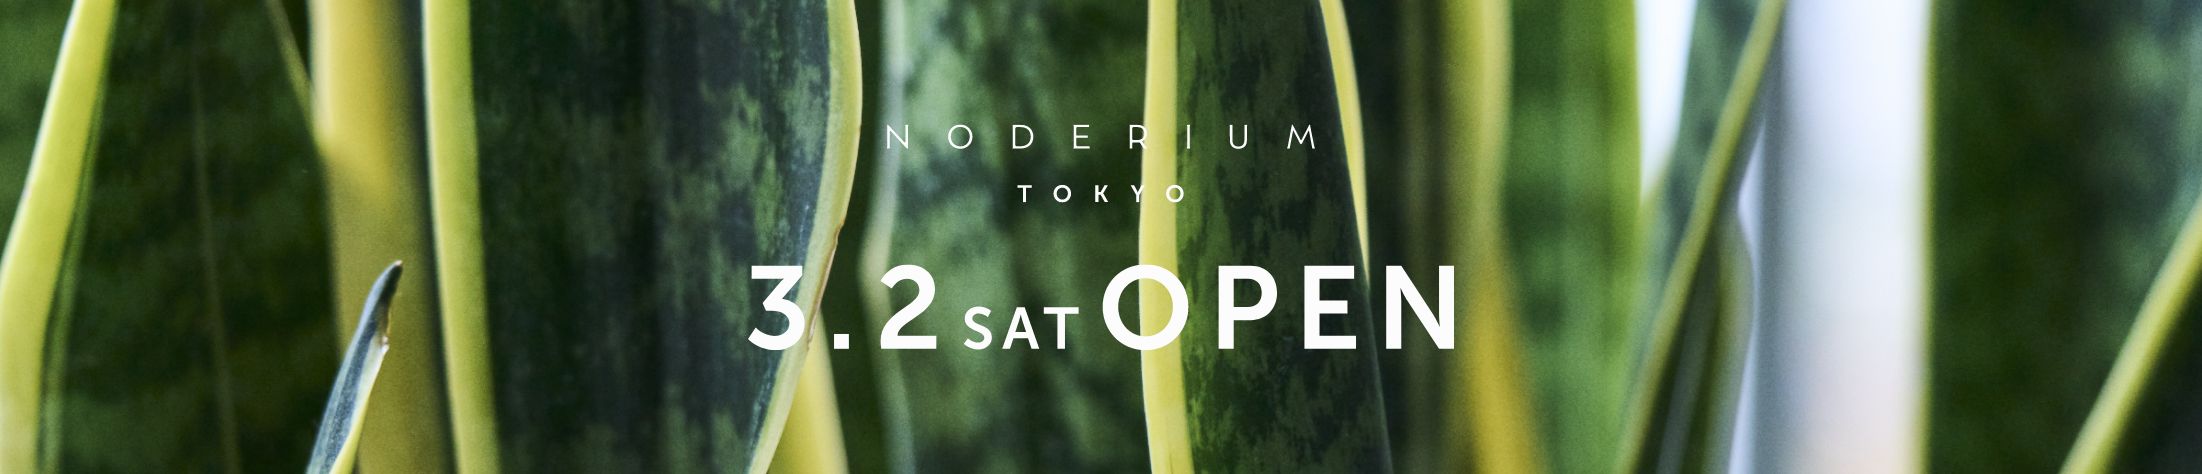 NODERIUM TOKYO 3.2 SAT OPEN